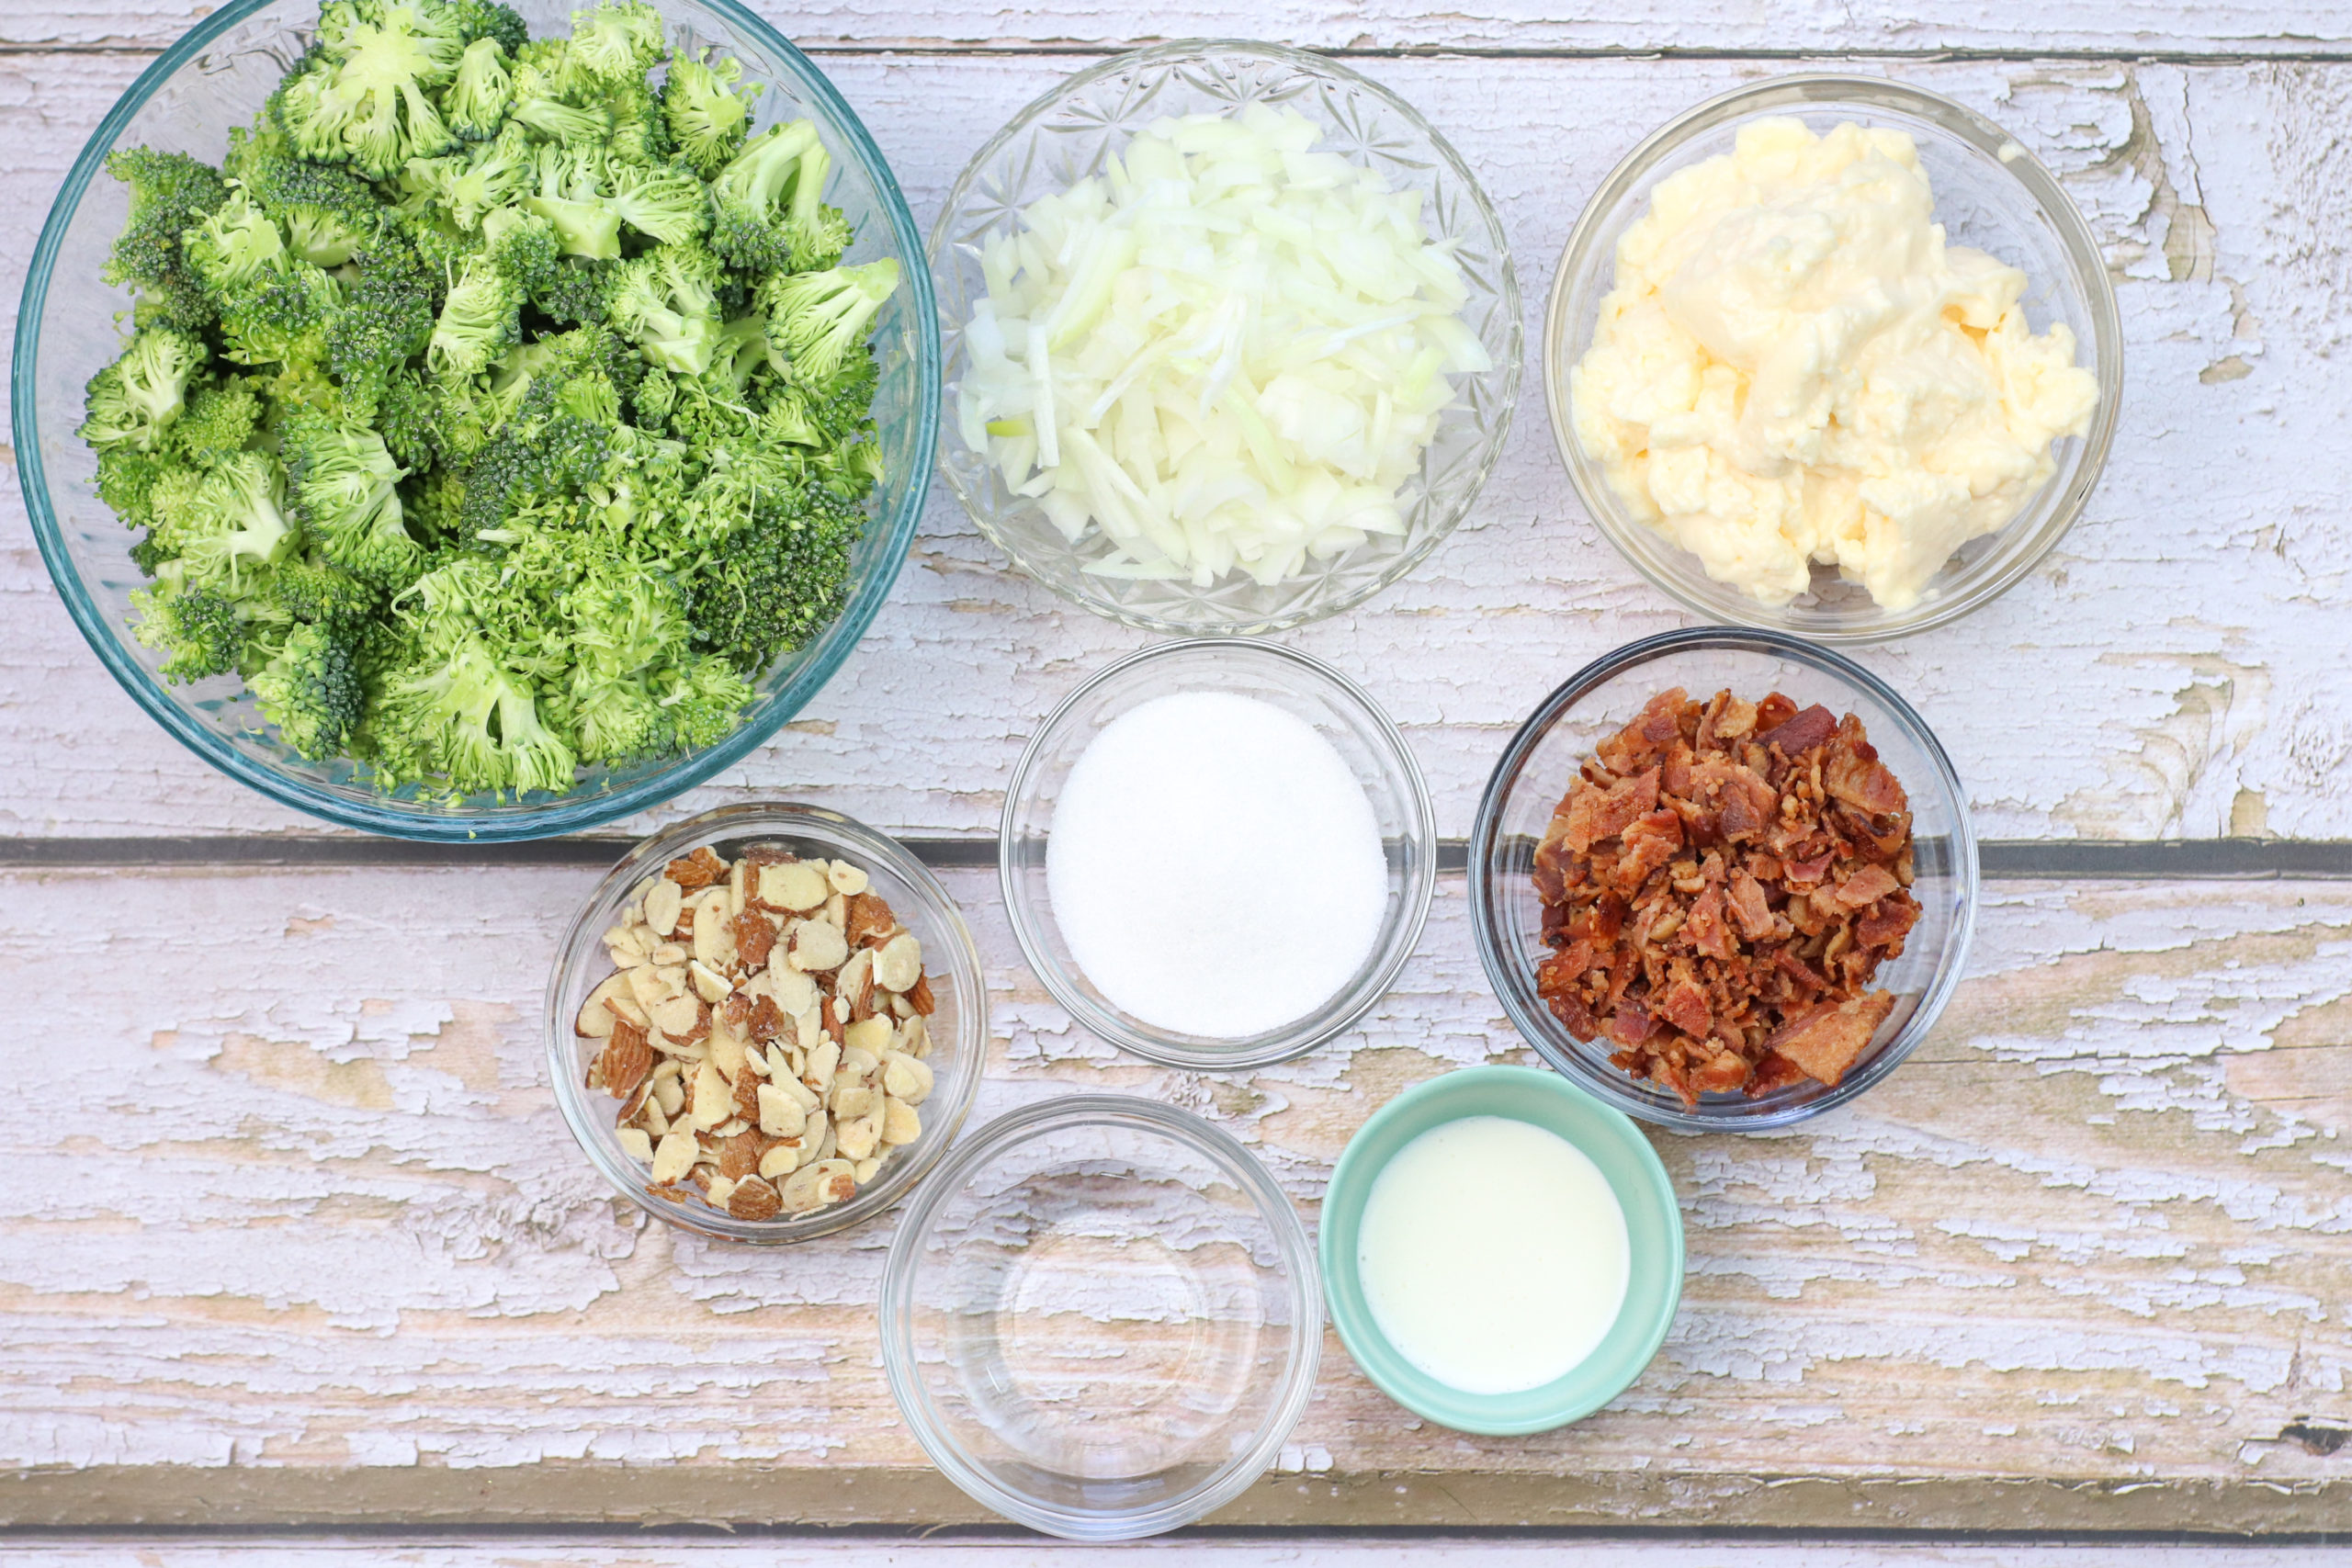 Broccoli, mayo and almonds for the salad.